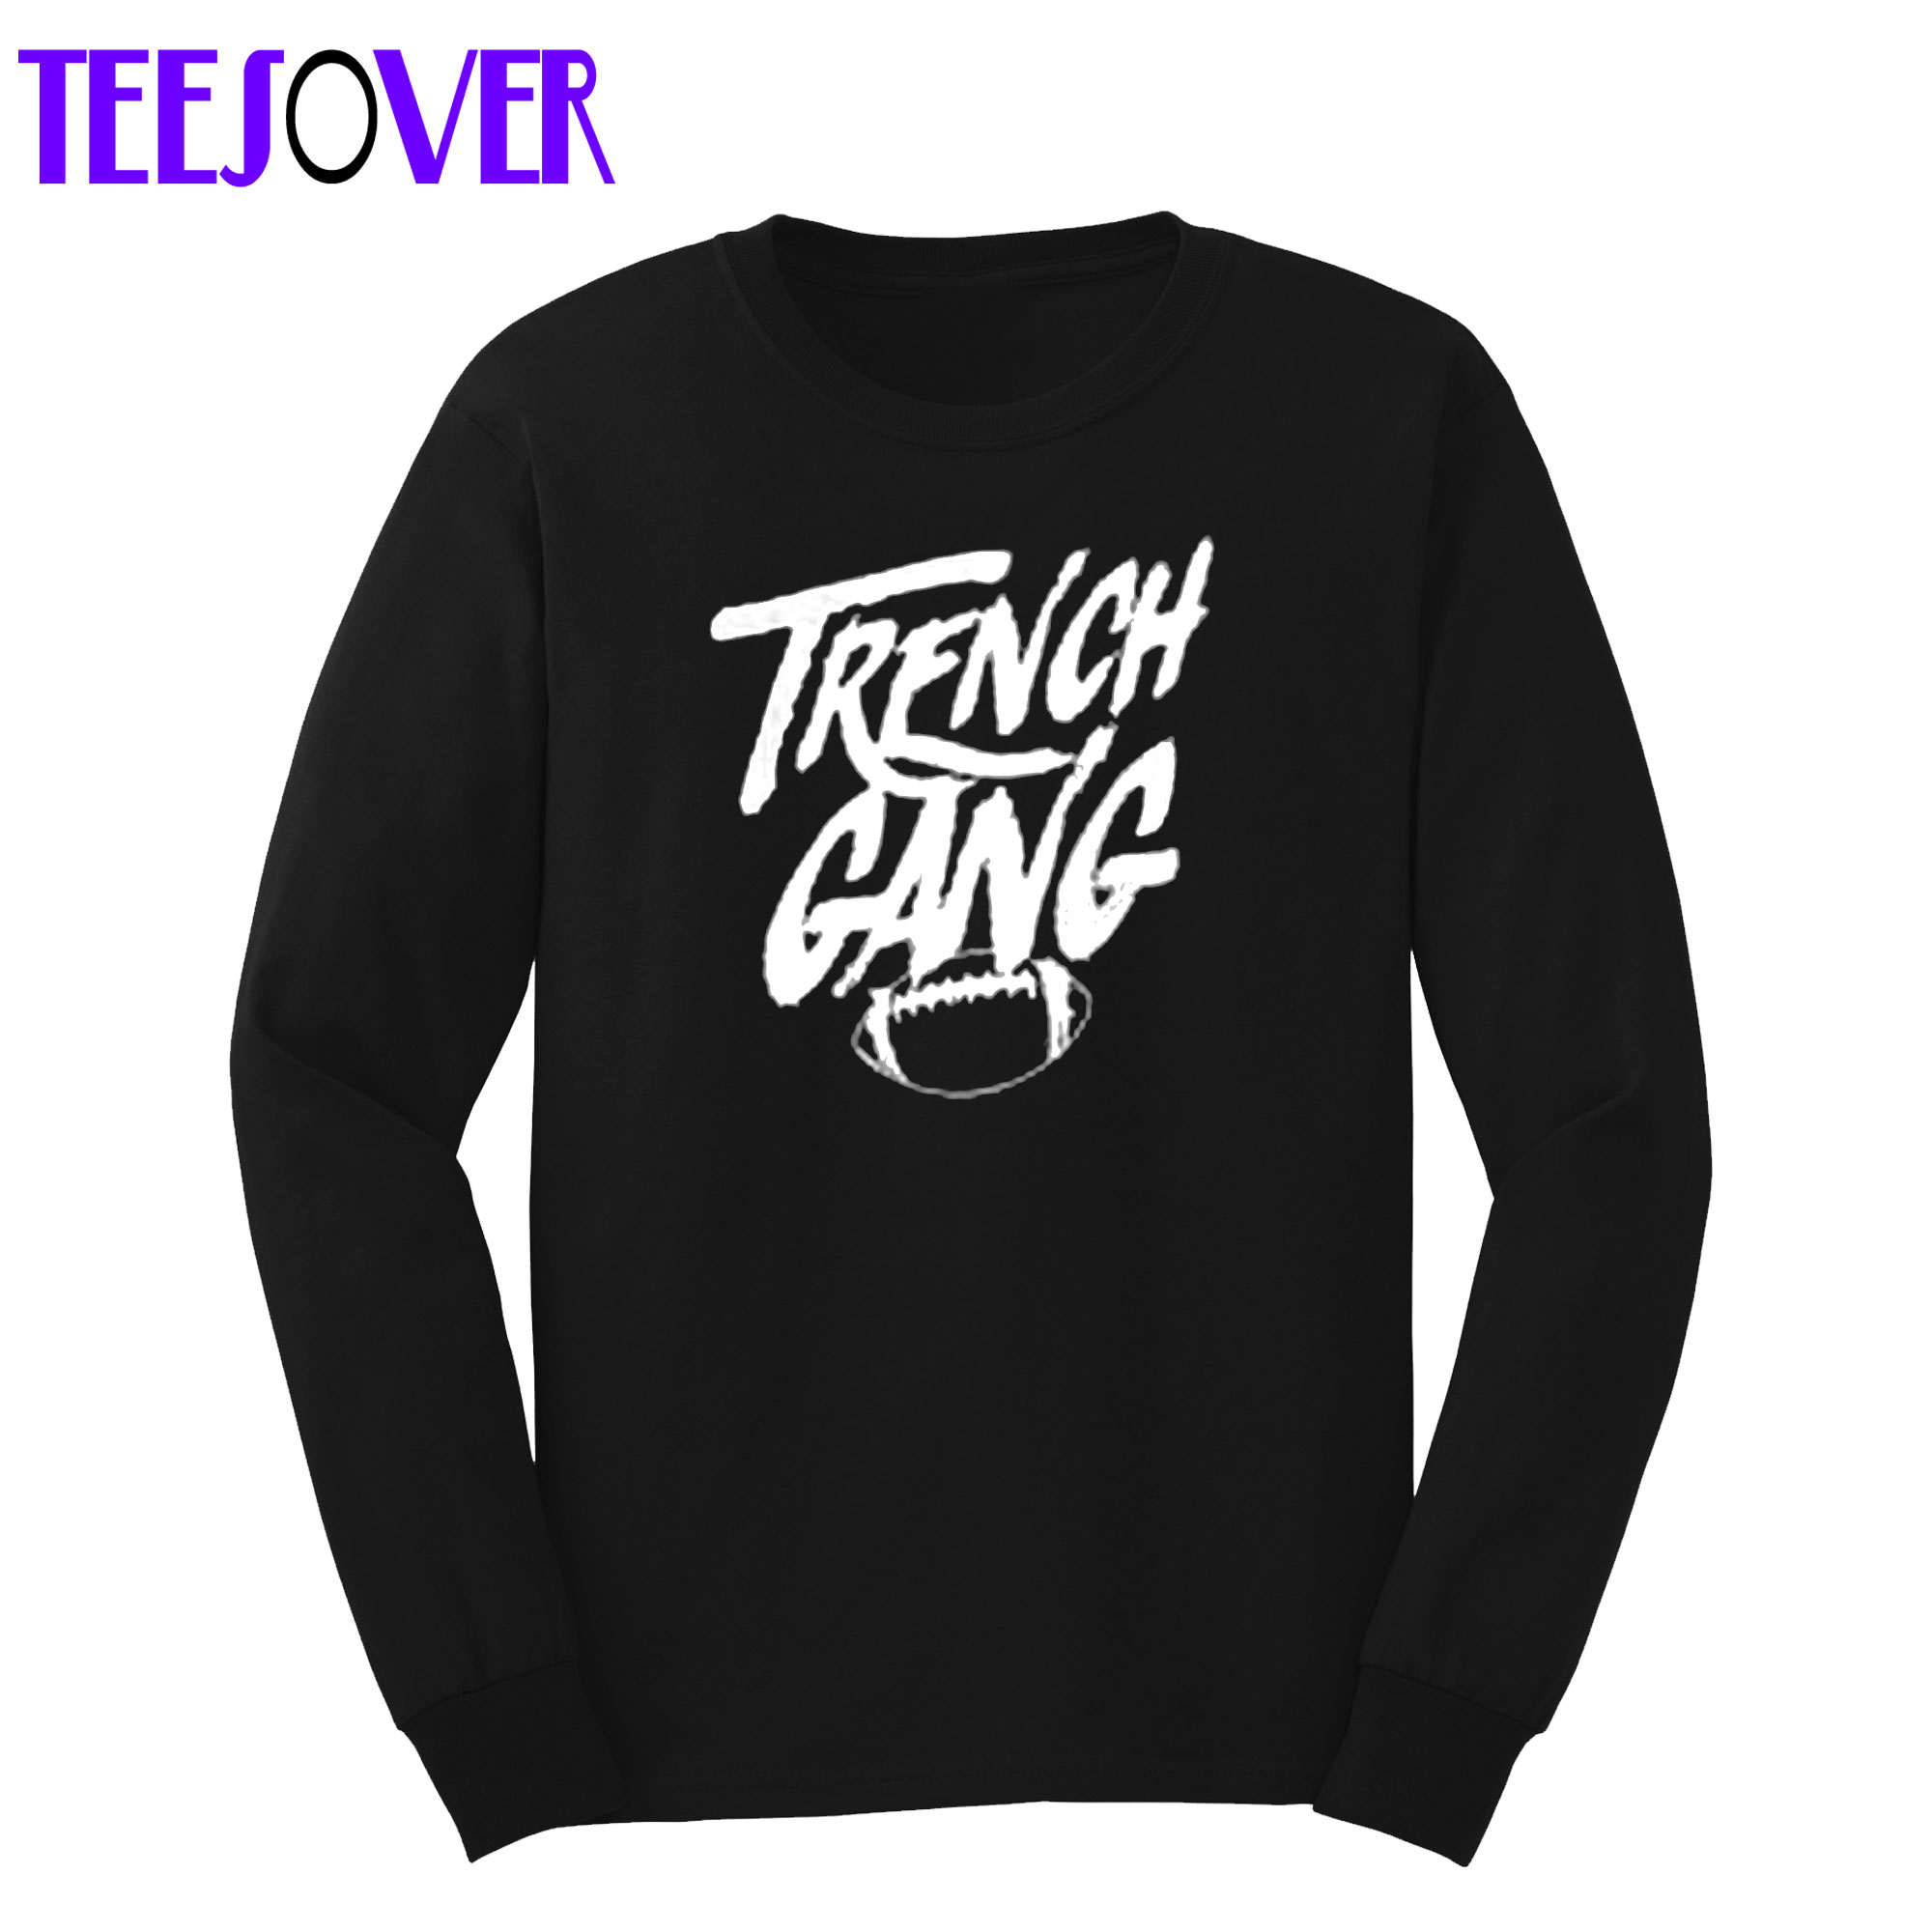 Trench Gang Sweatshirt